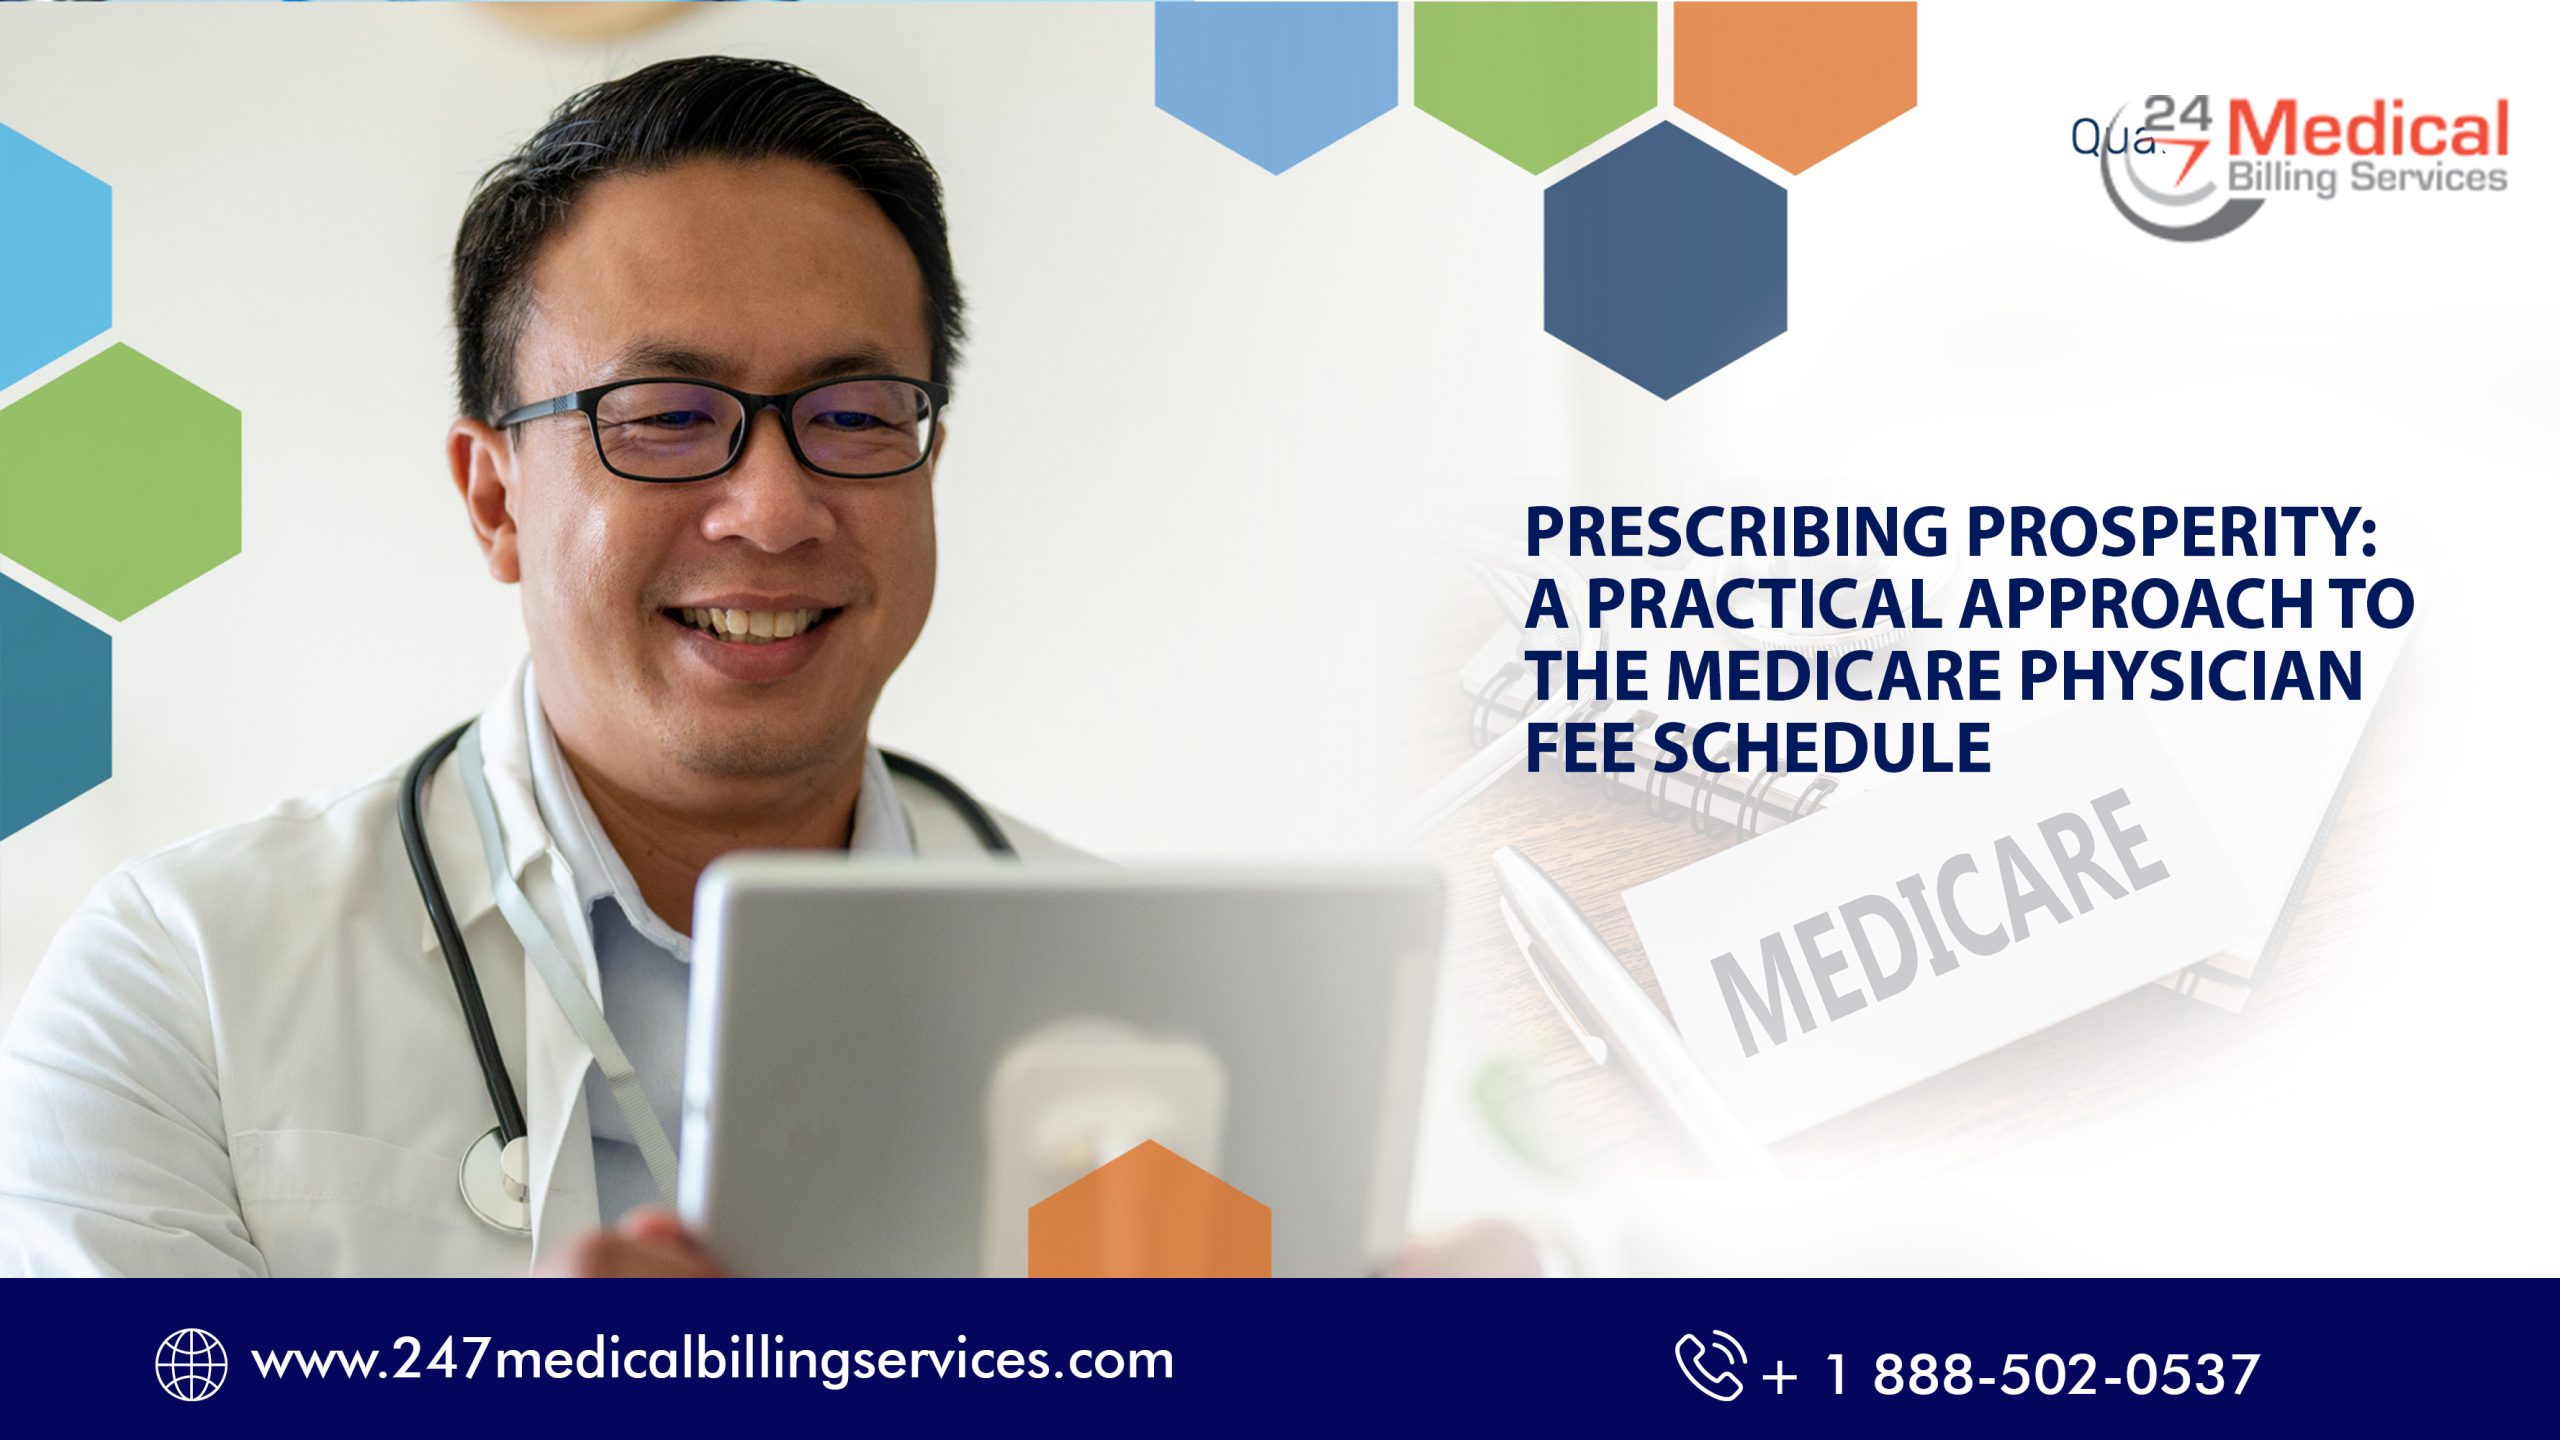  Prescribing Prosperity: A Practical Approach to the Medicare Physician Fee Schedule